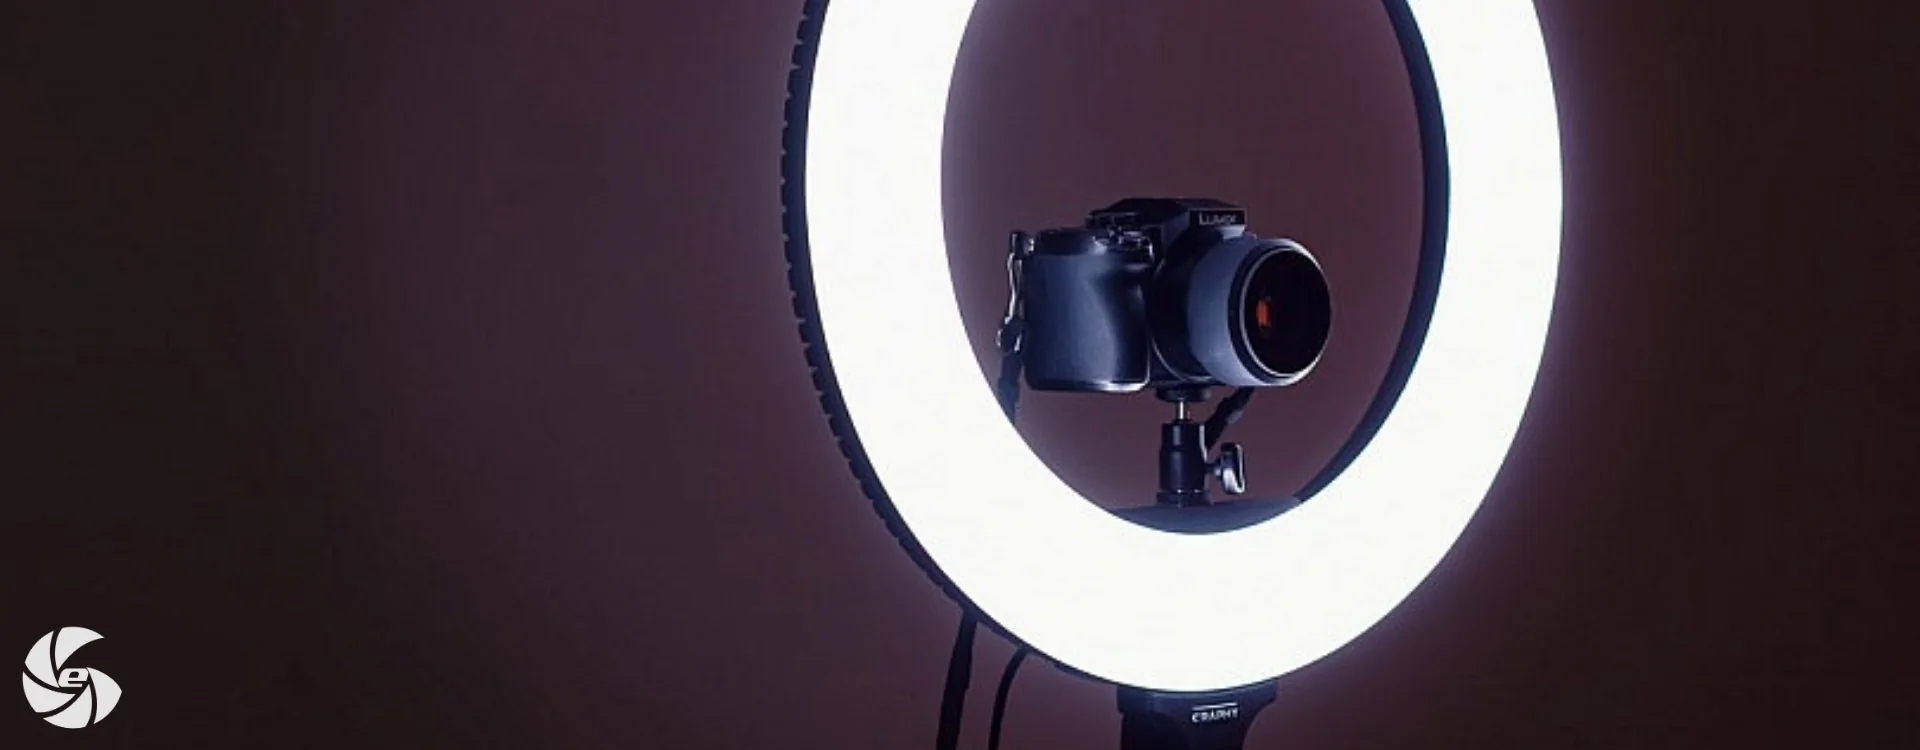 Accesorios de Iluminación LED para Fotografía Vídeo